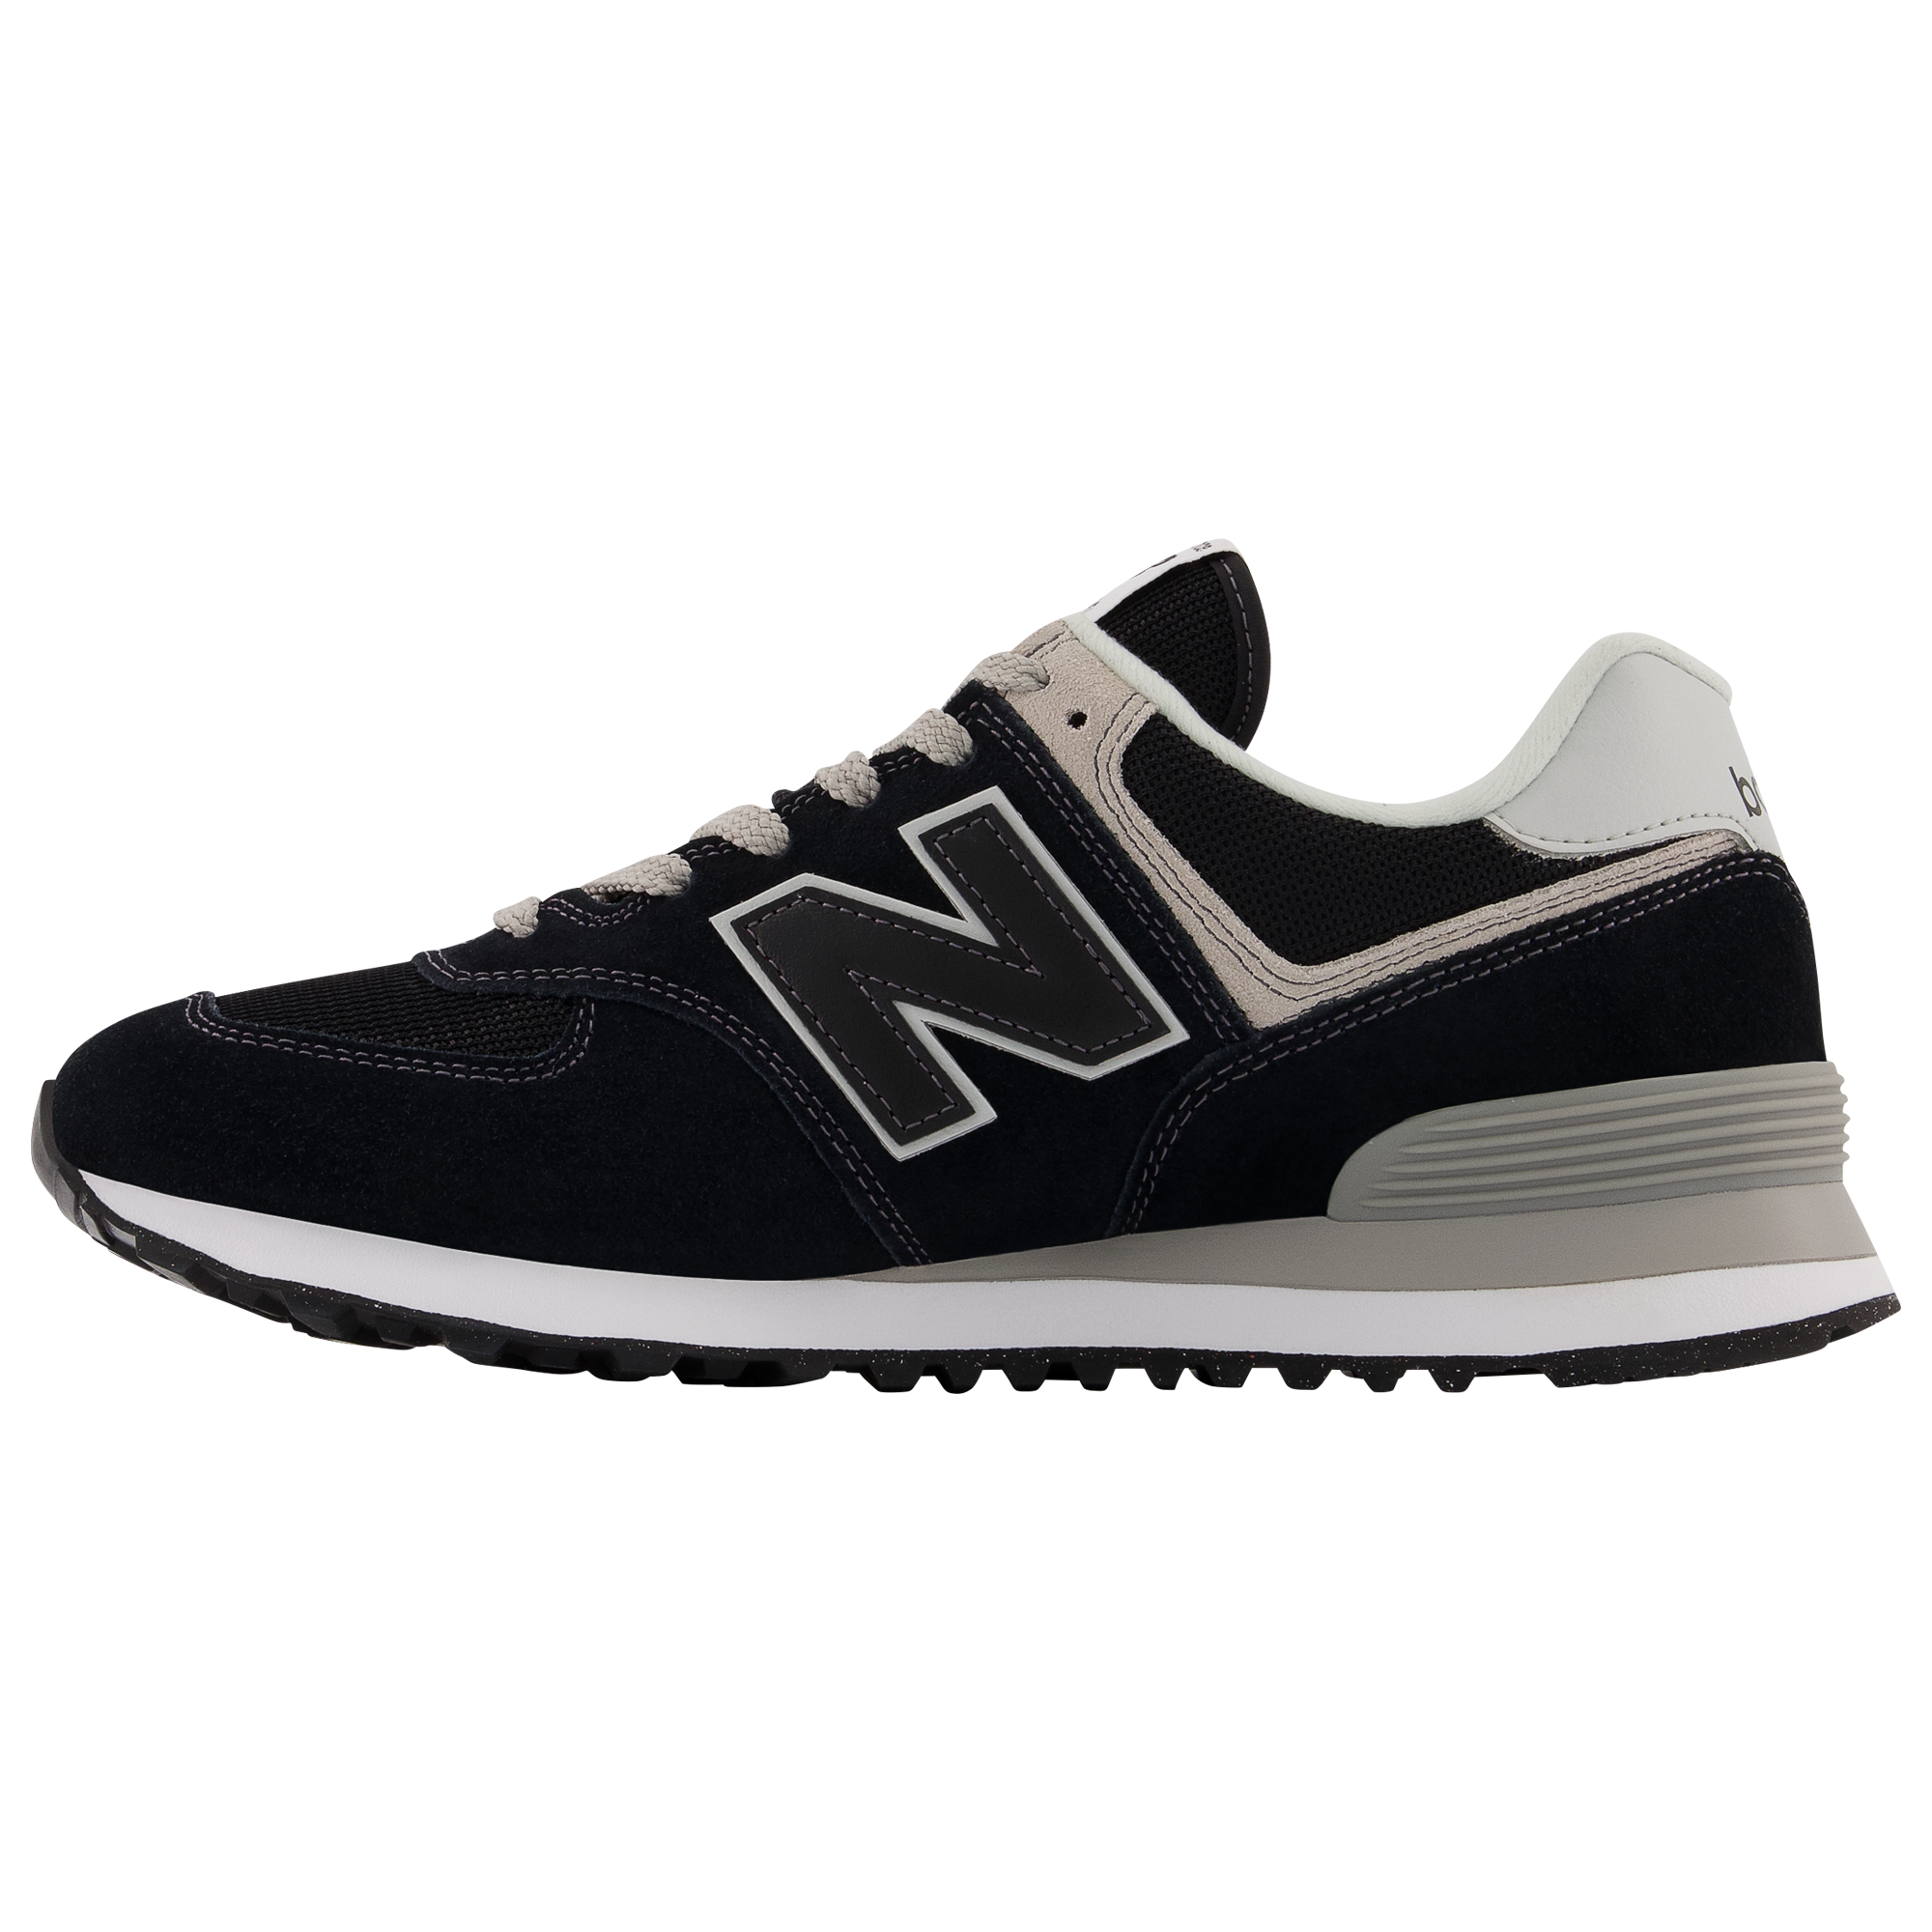 New Balance Men's 574 Core Sneakers Black White